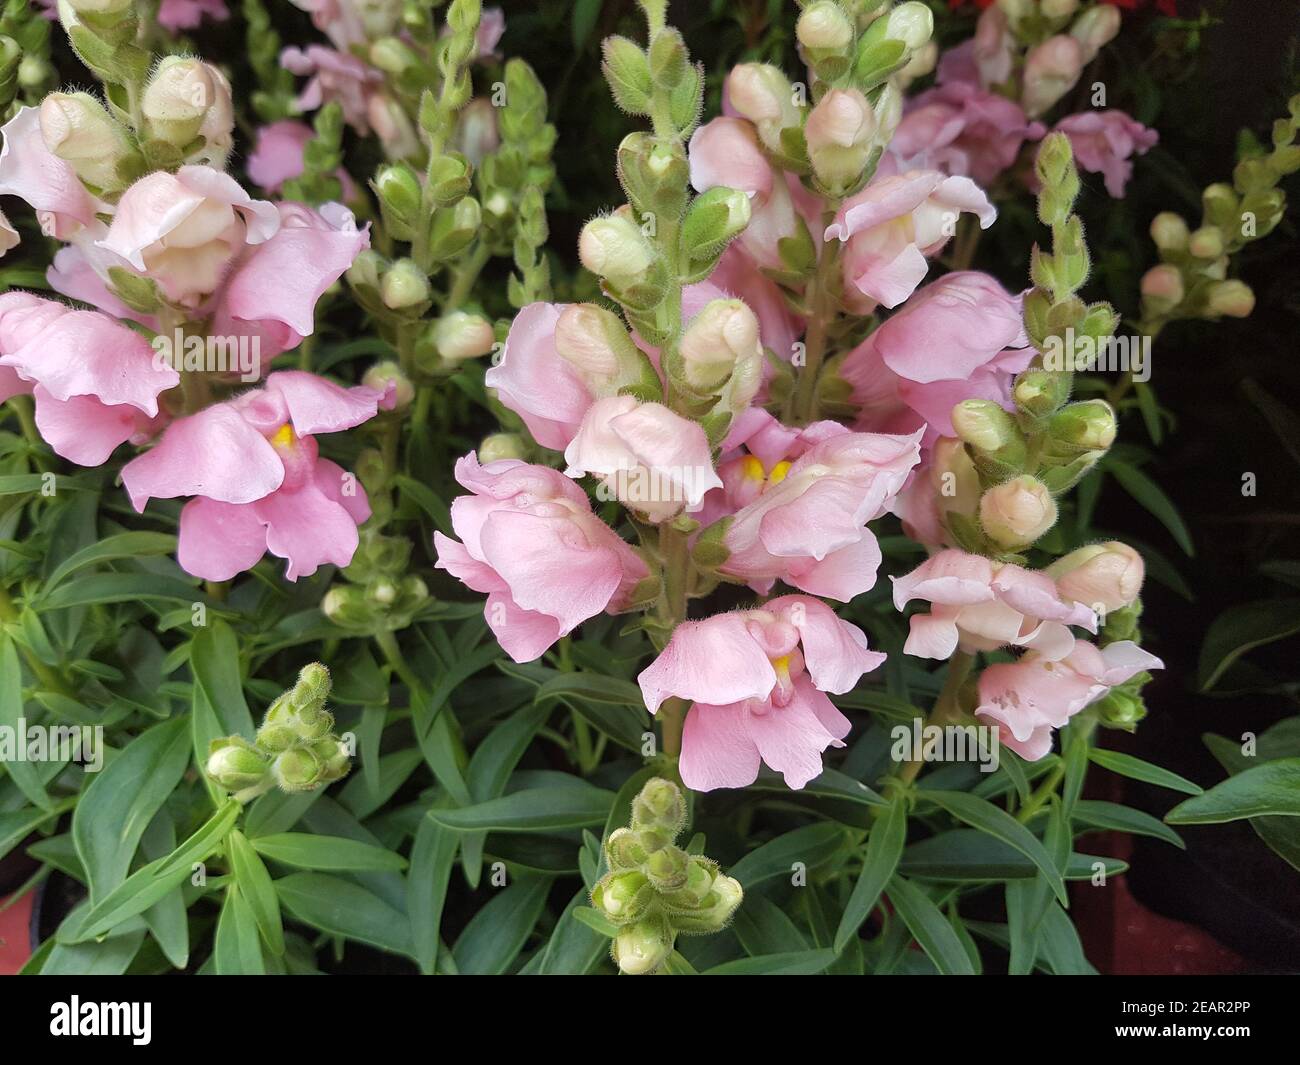 Loewenmaul, Antirrhinum, majus, Sommerblume Stock Photo